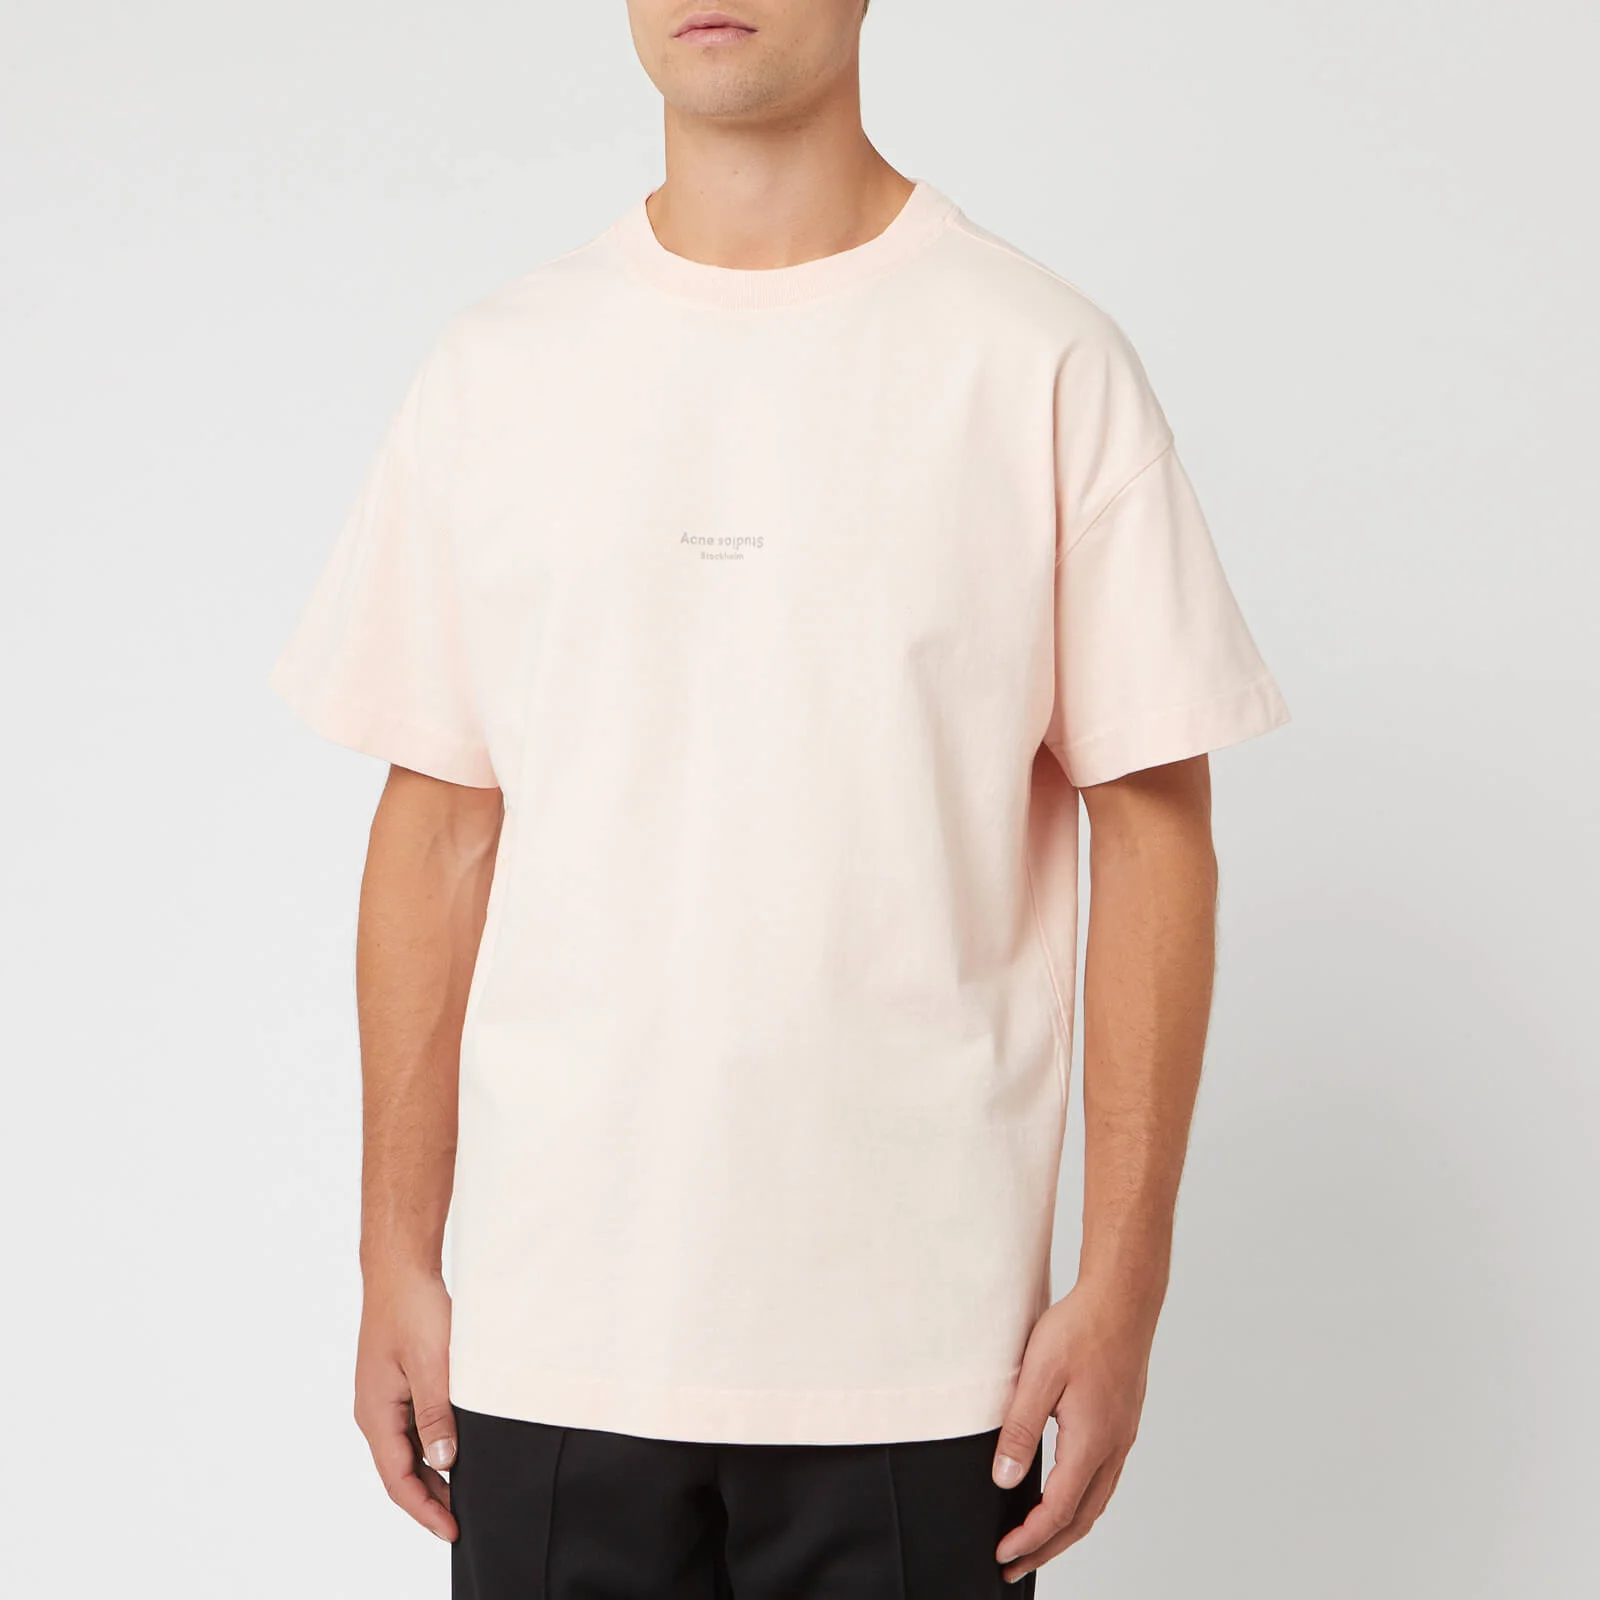 Acne Studios Men's Jaxon T-Shirt - Dusty Pink Image 1